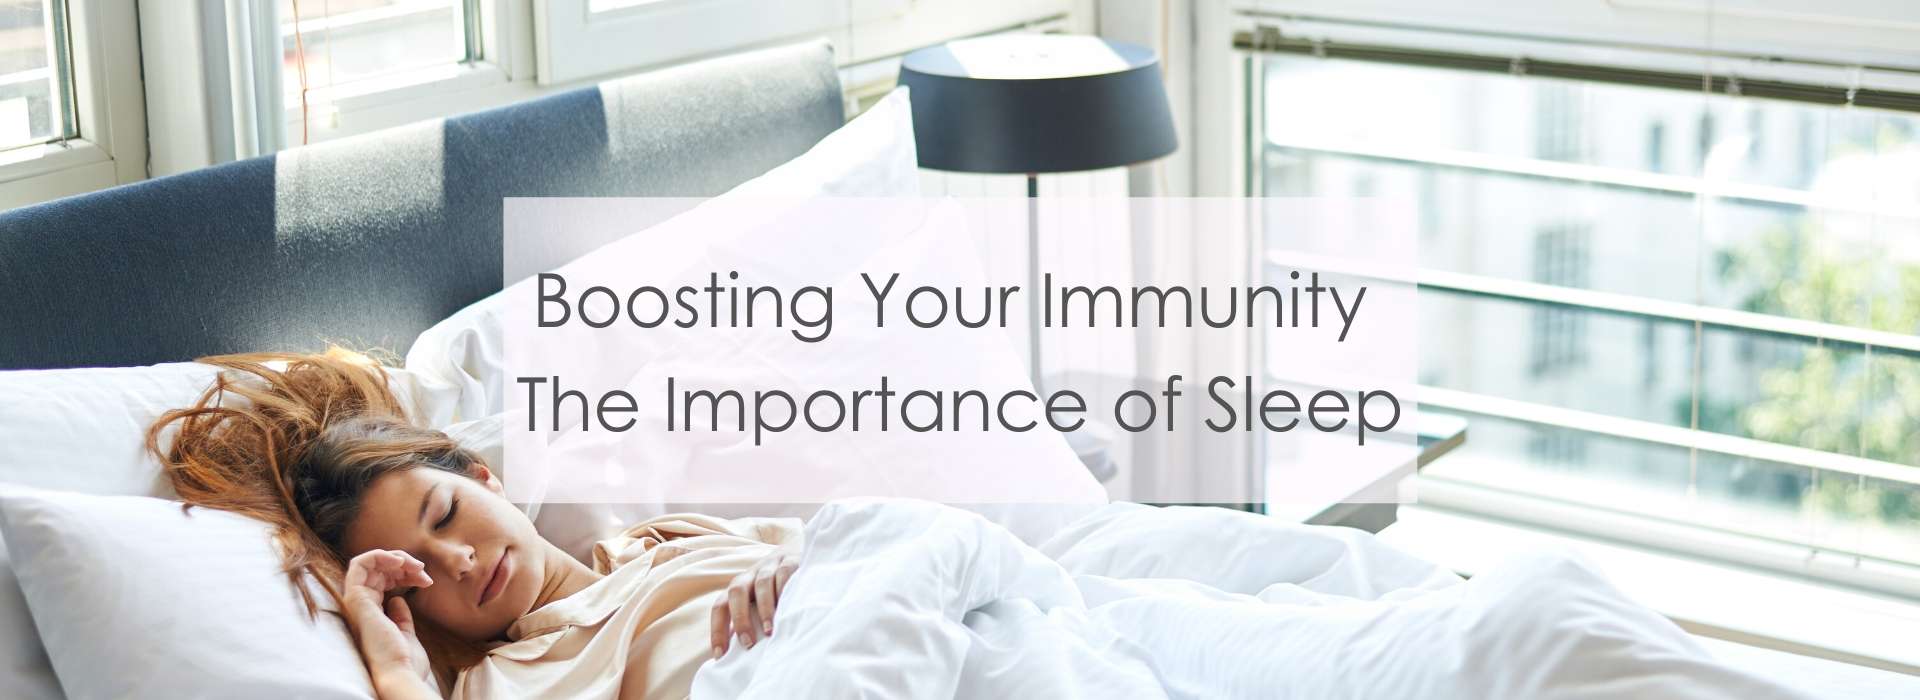 sleep-improving-immunity